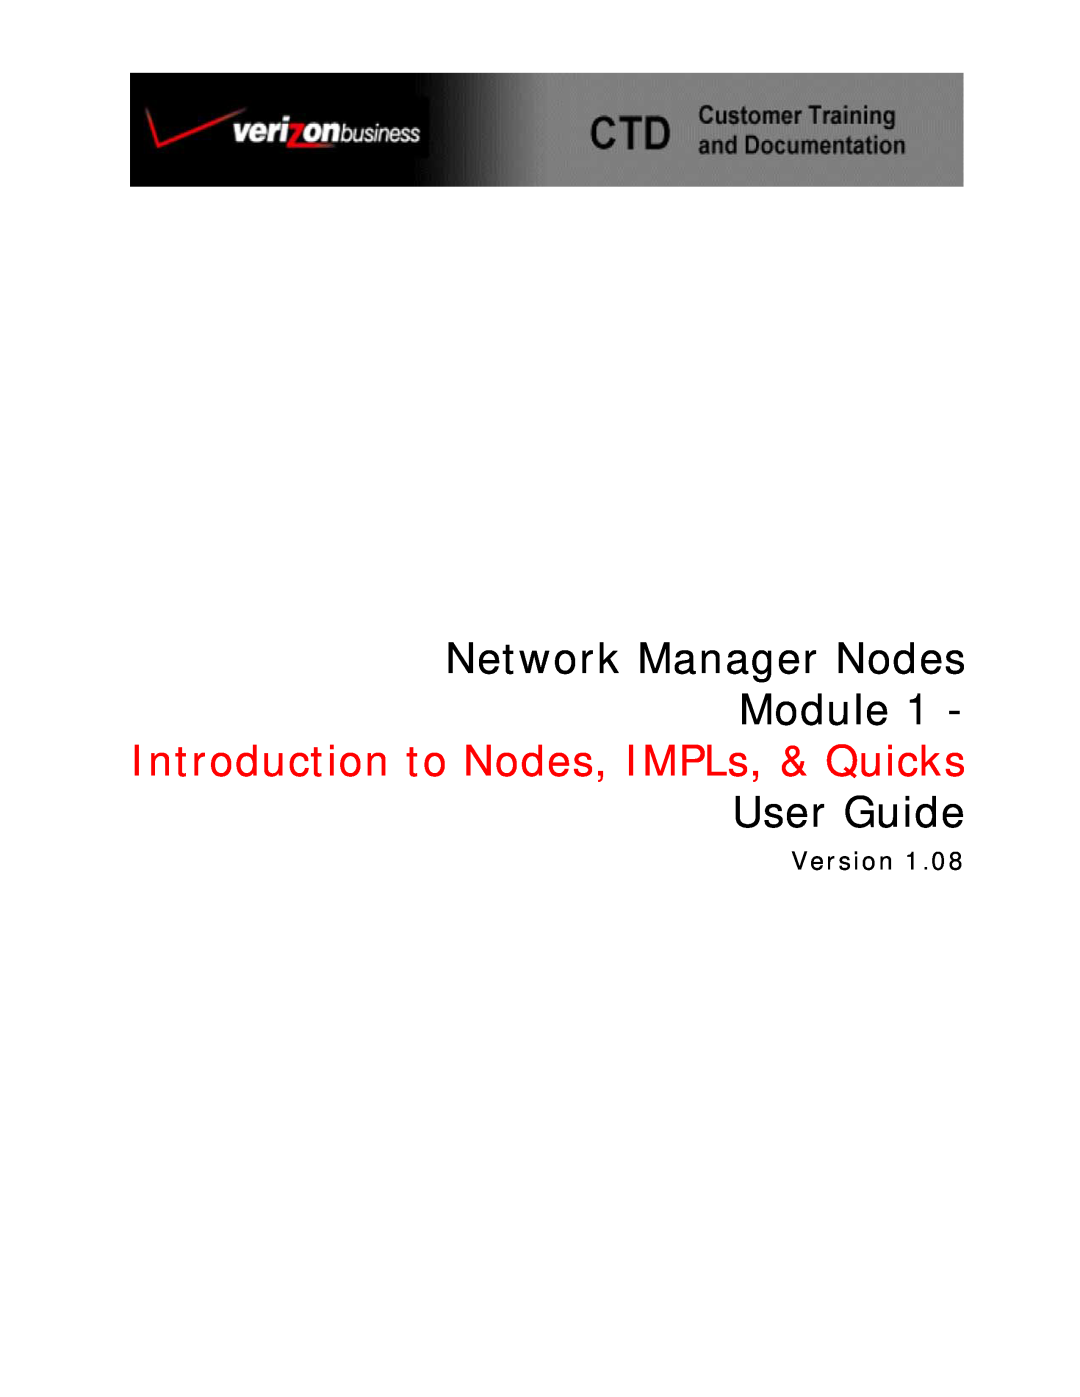 Verizon Network Manager Nodes manual Version 